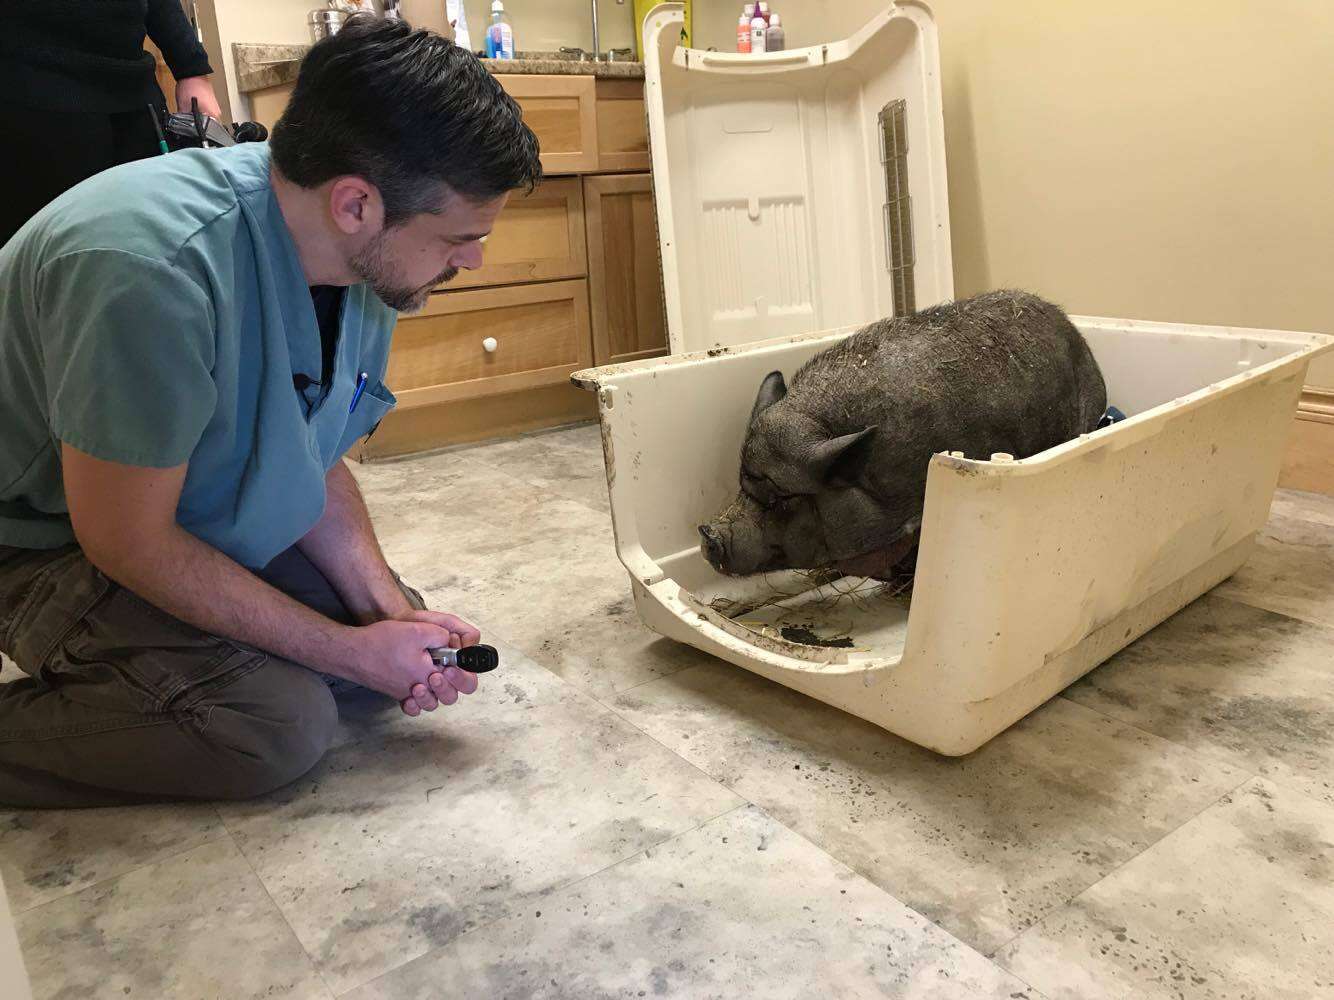 Neglected pet pig getting help at Ontario vet